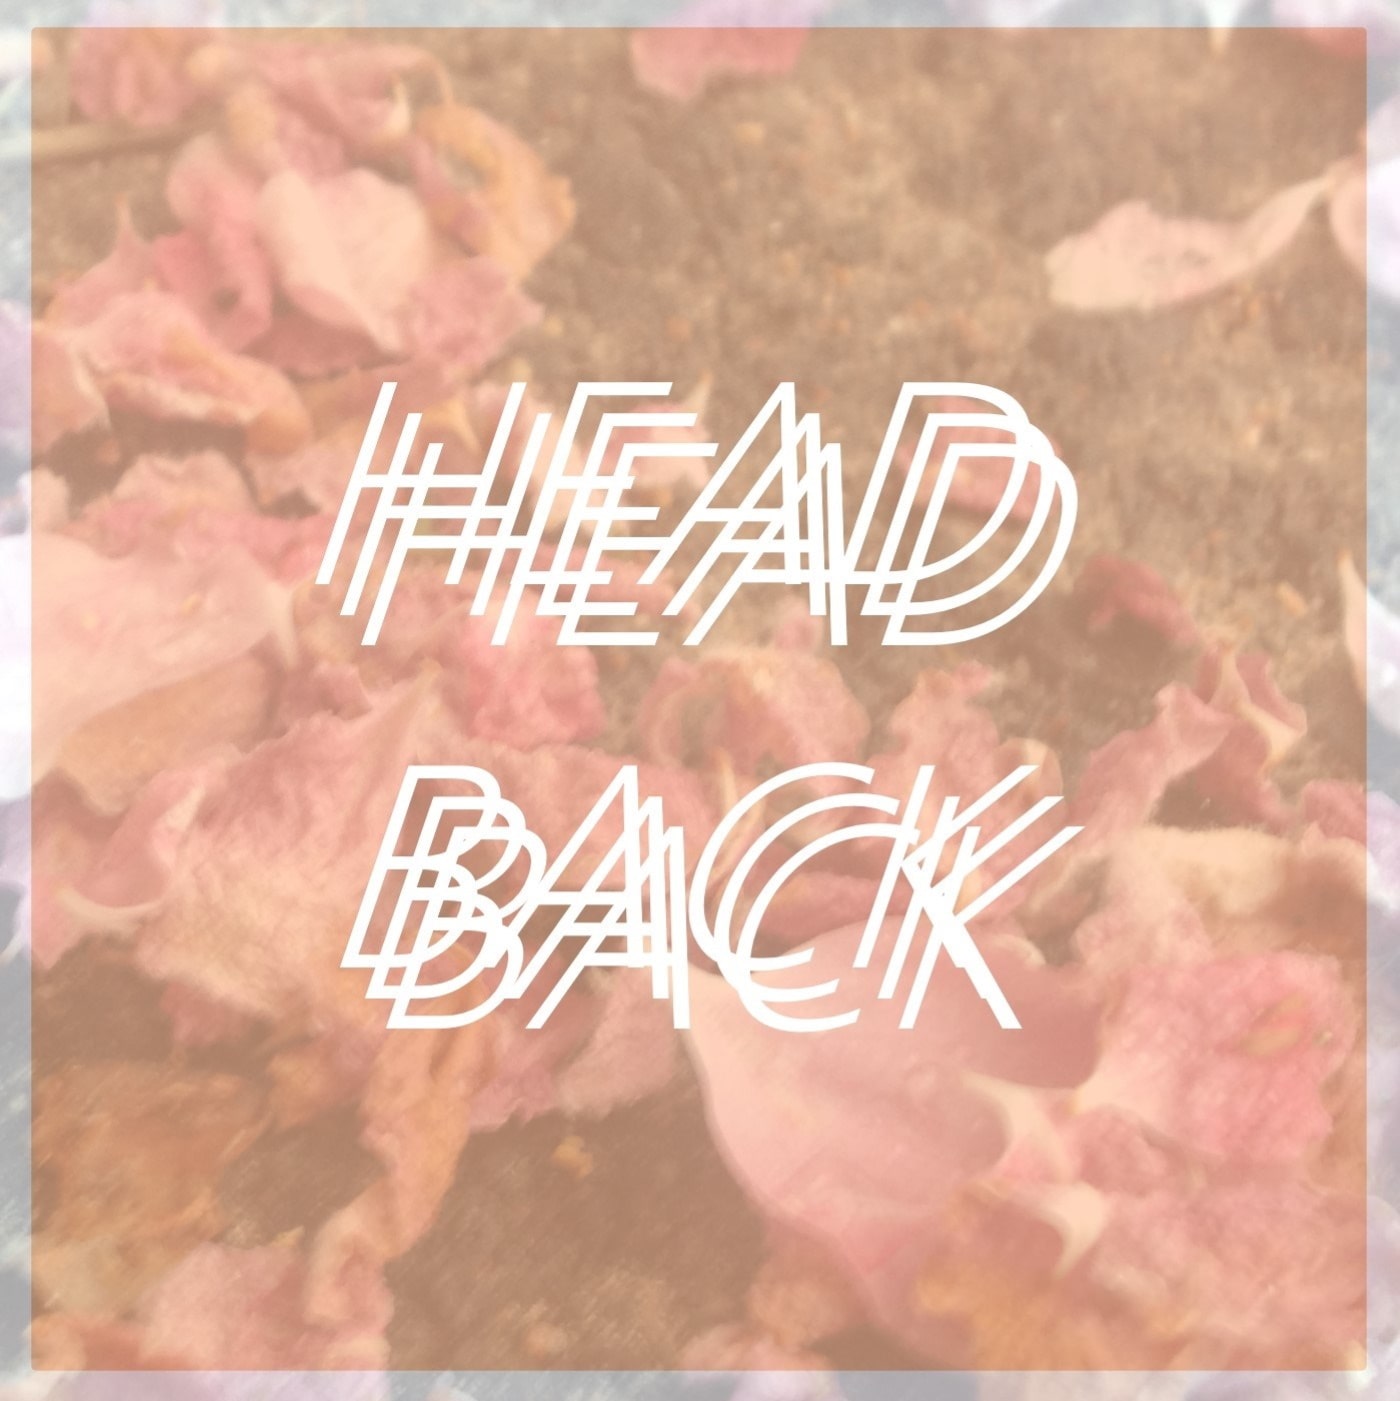 HEAD BACK